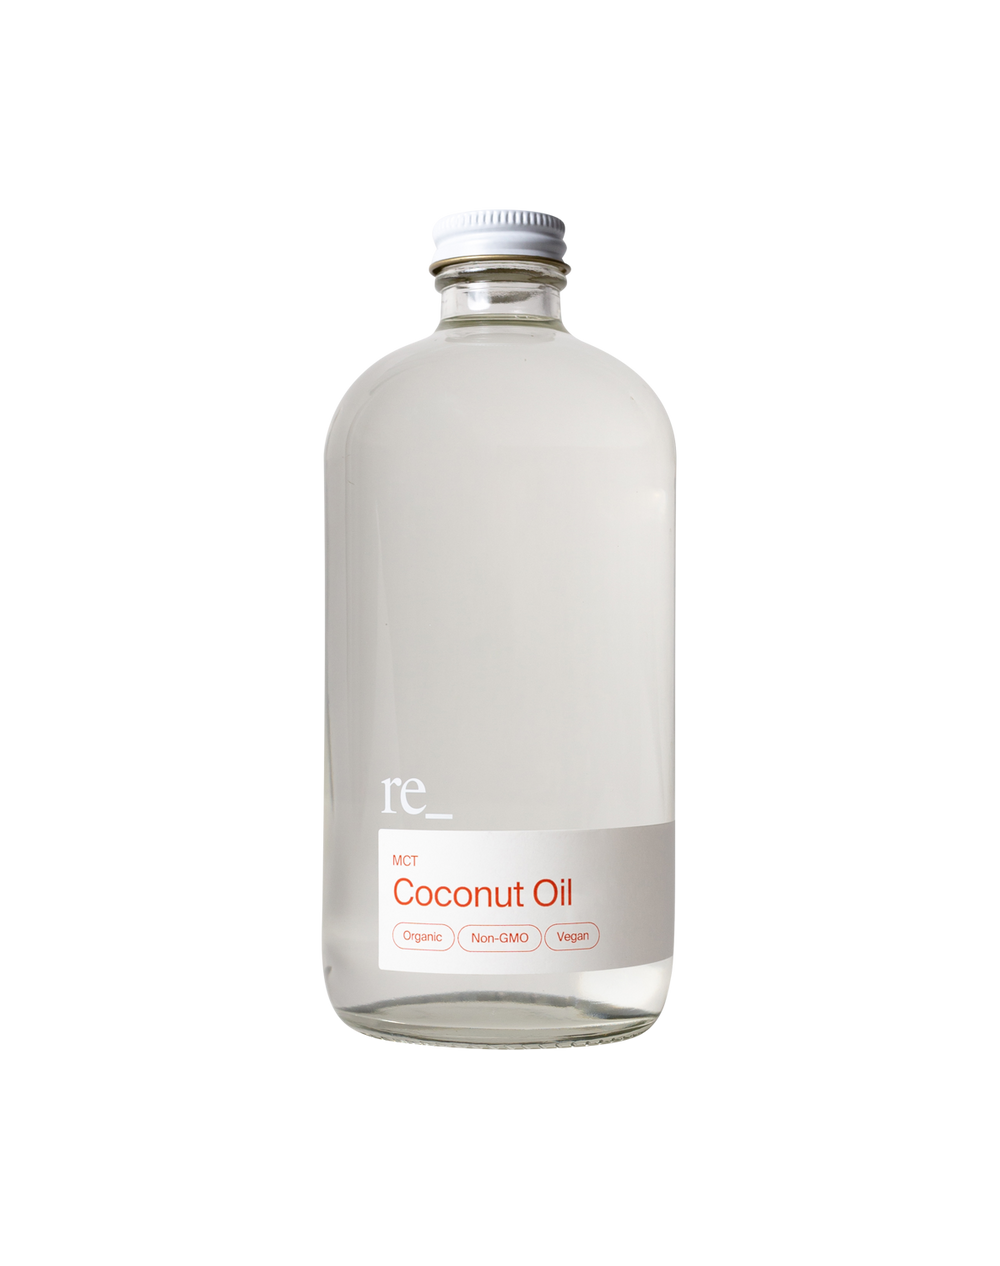 Coconut Oil, Mct, Bottle re_